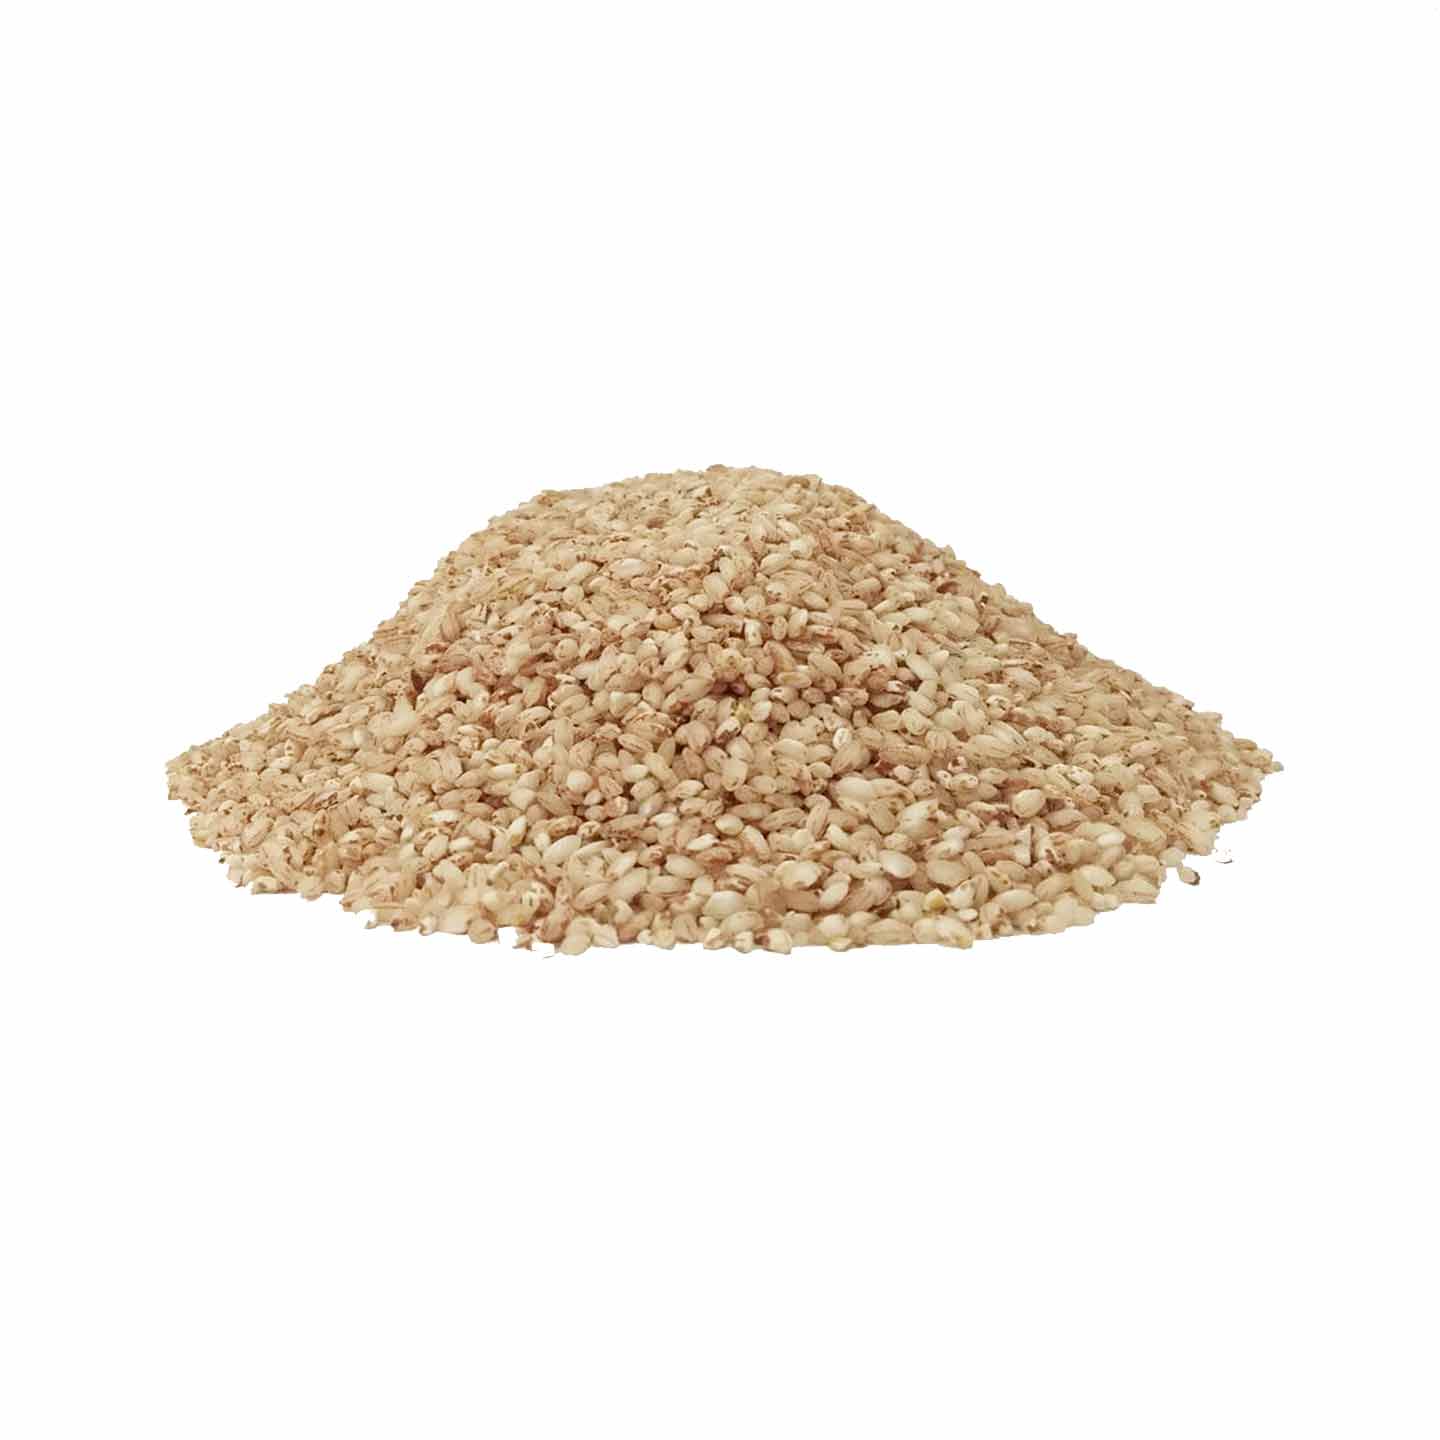 Red Rice - Chum Marp, 1kg